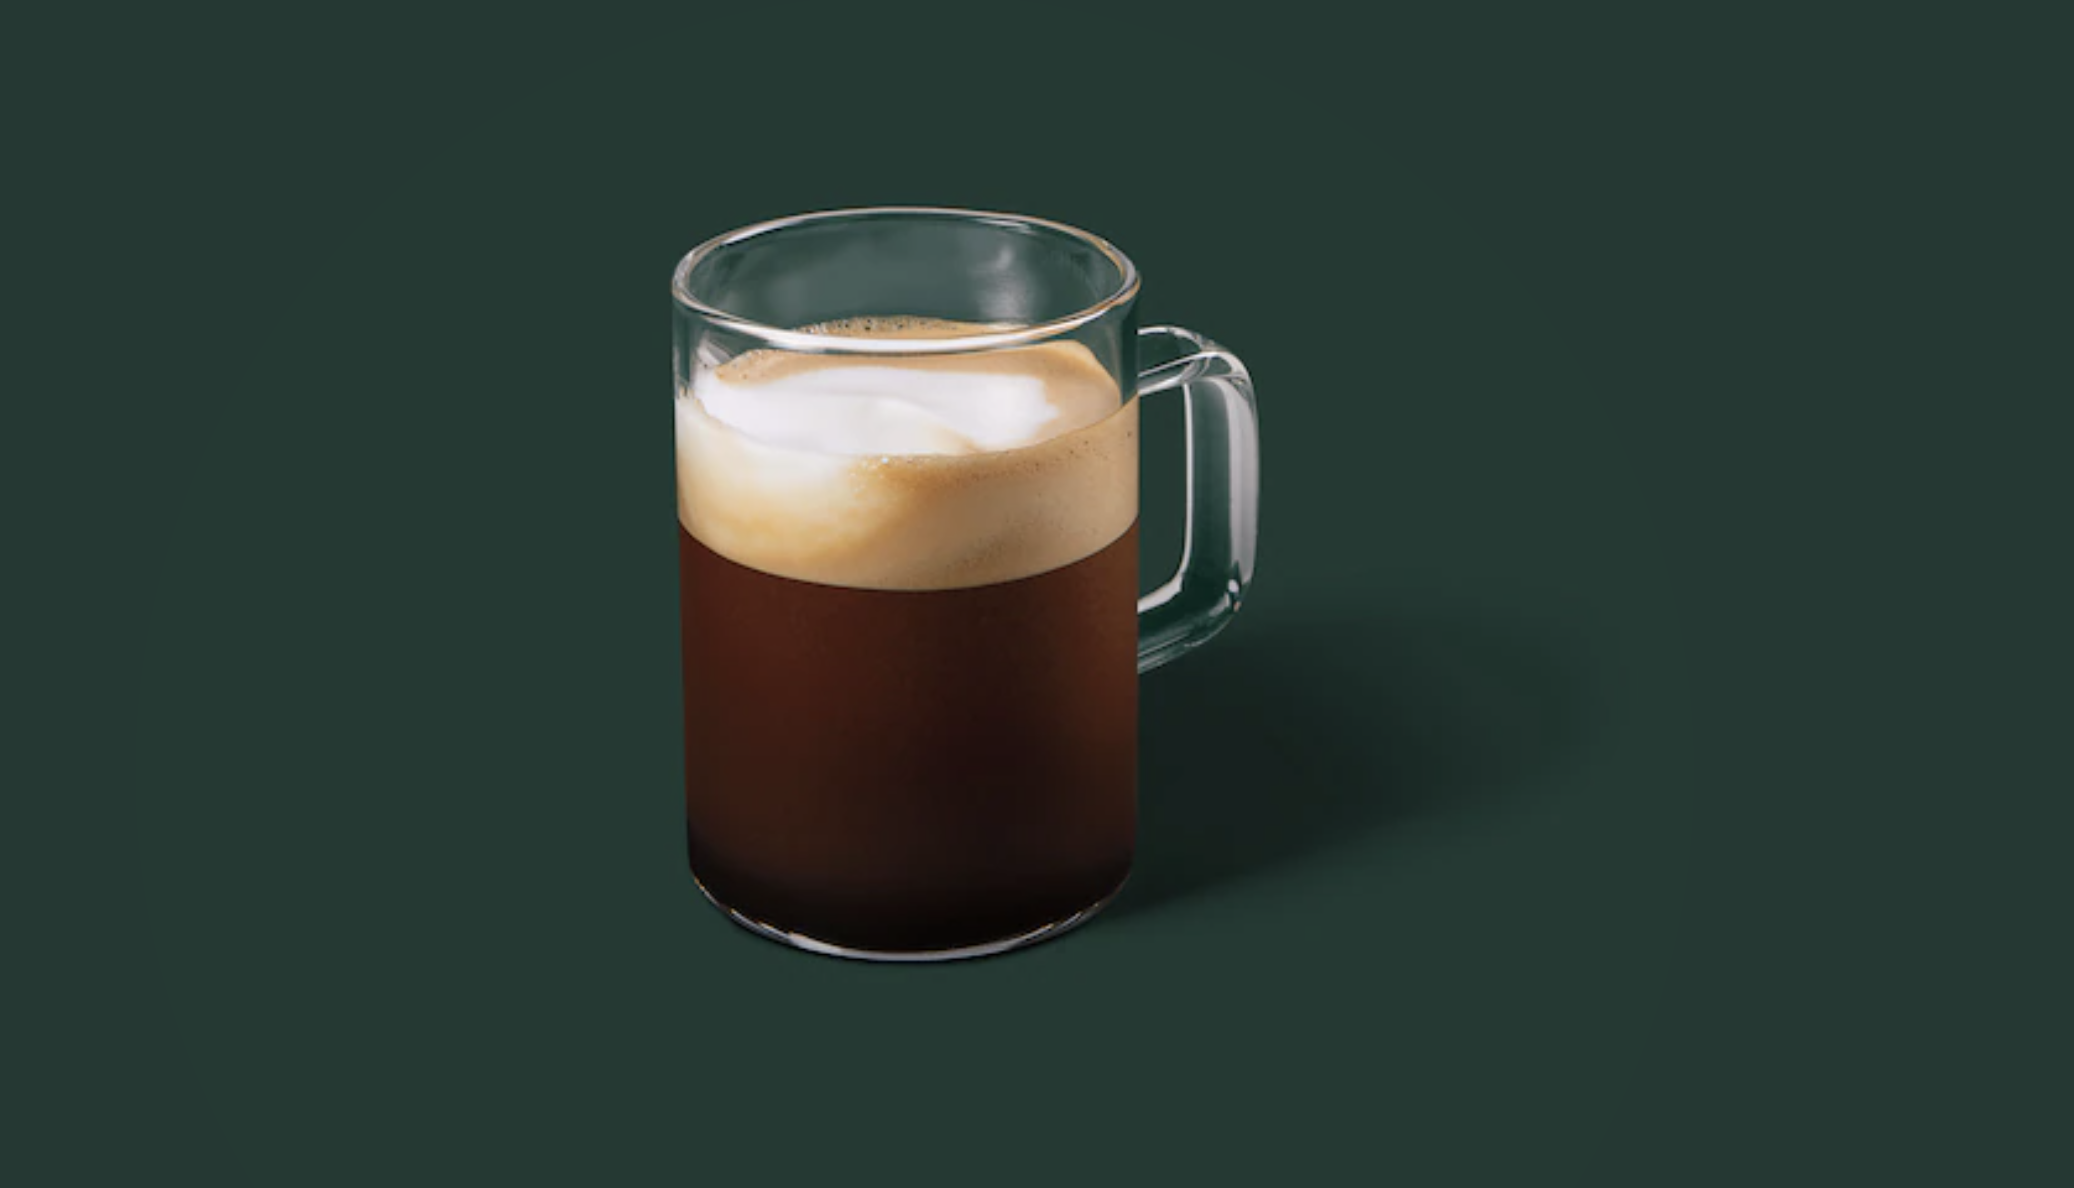 An espresso drink with foam